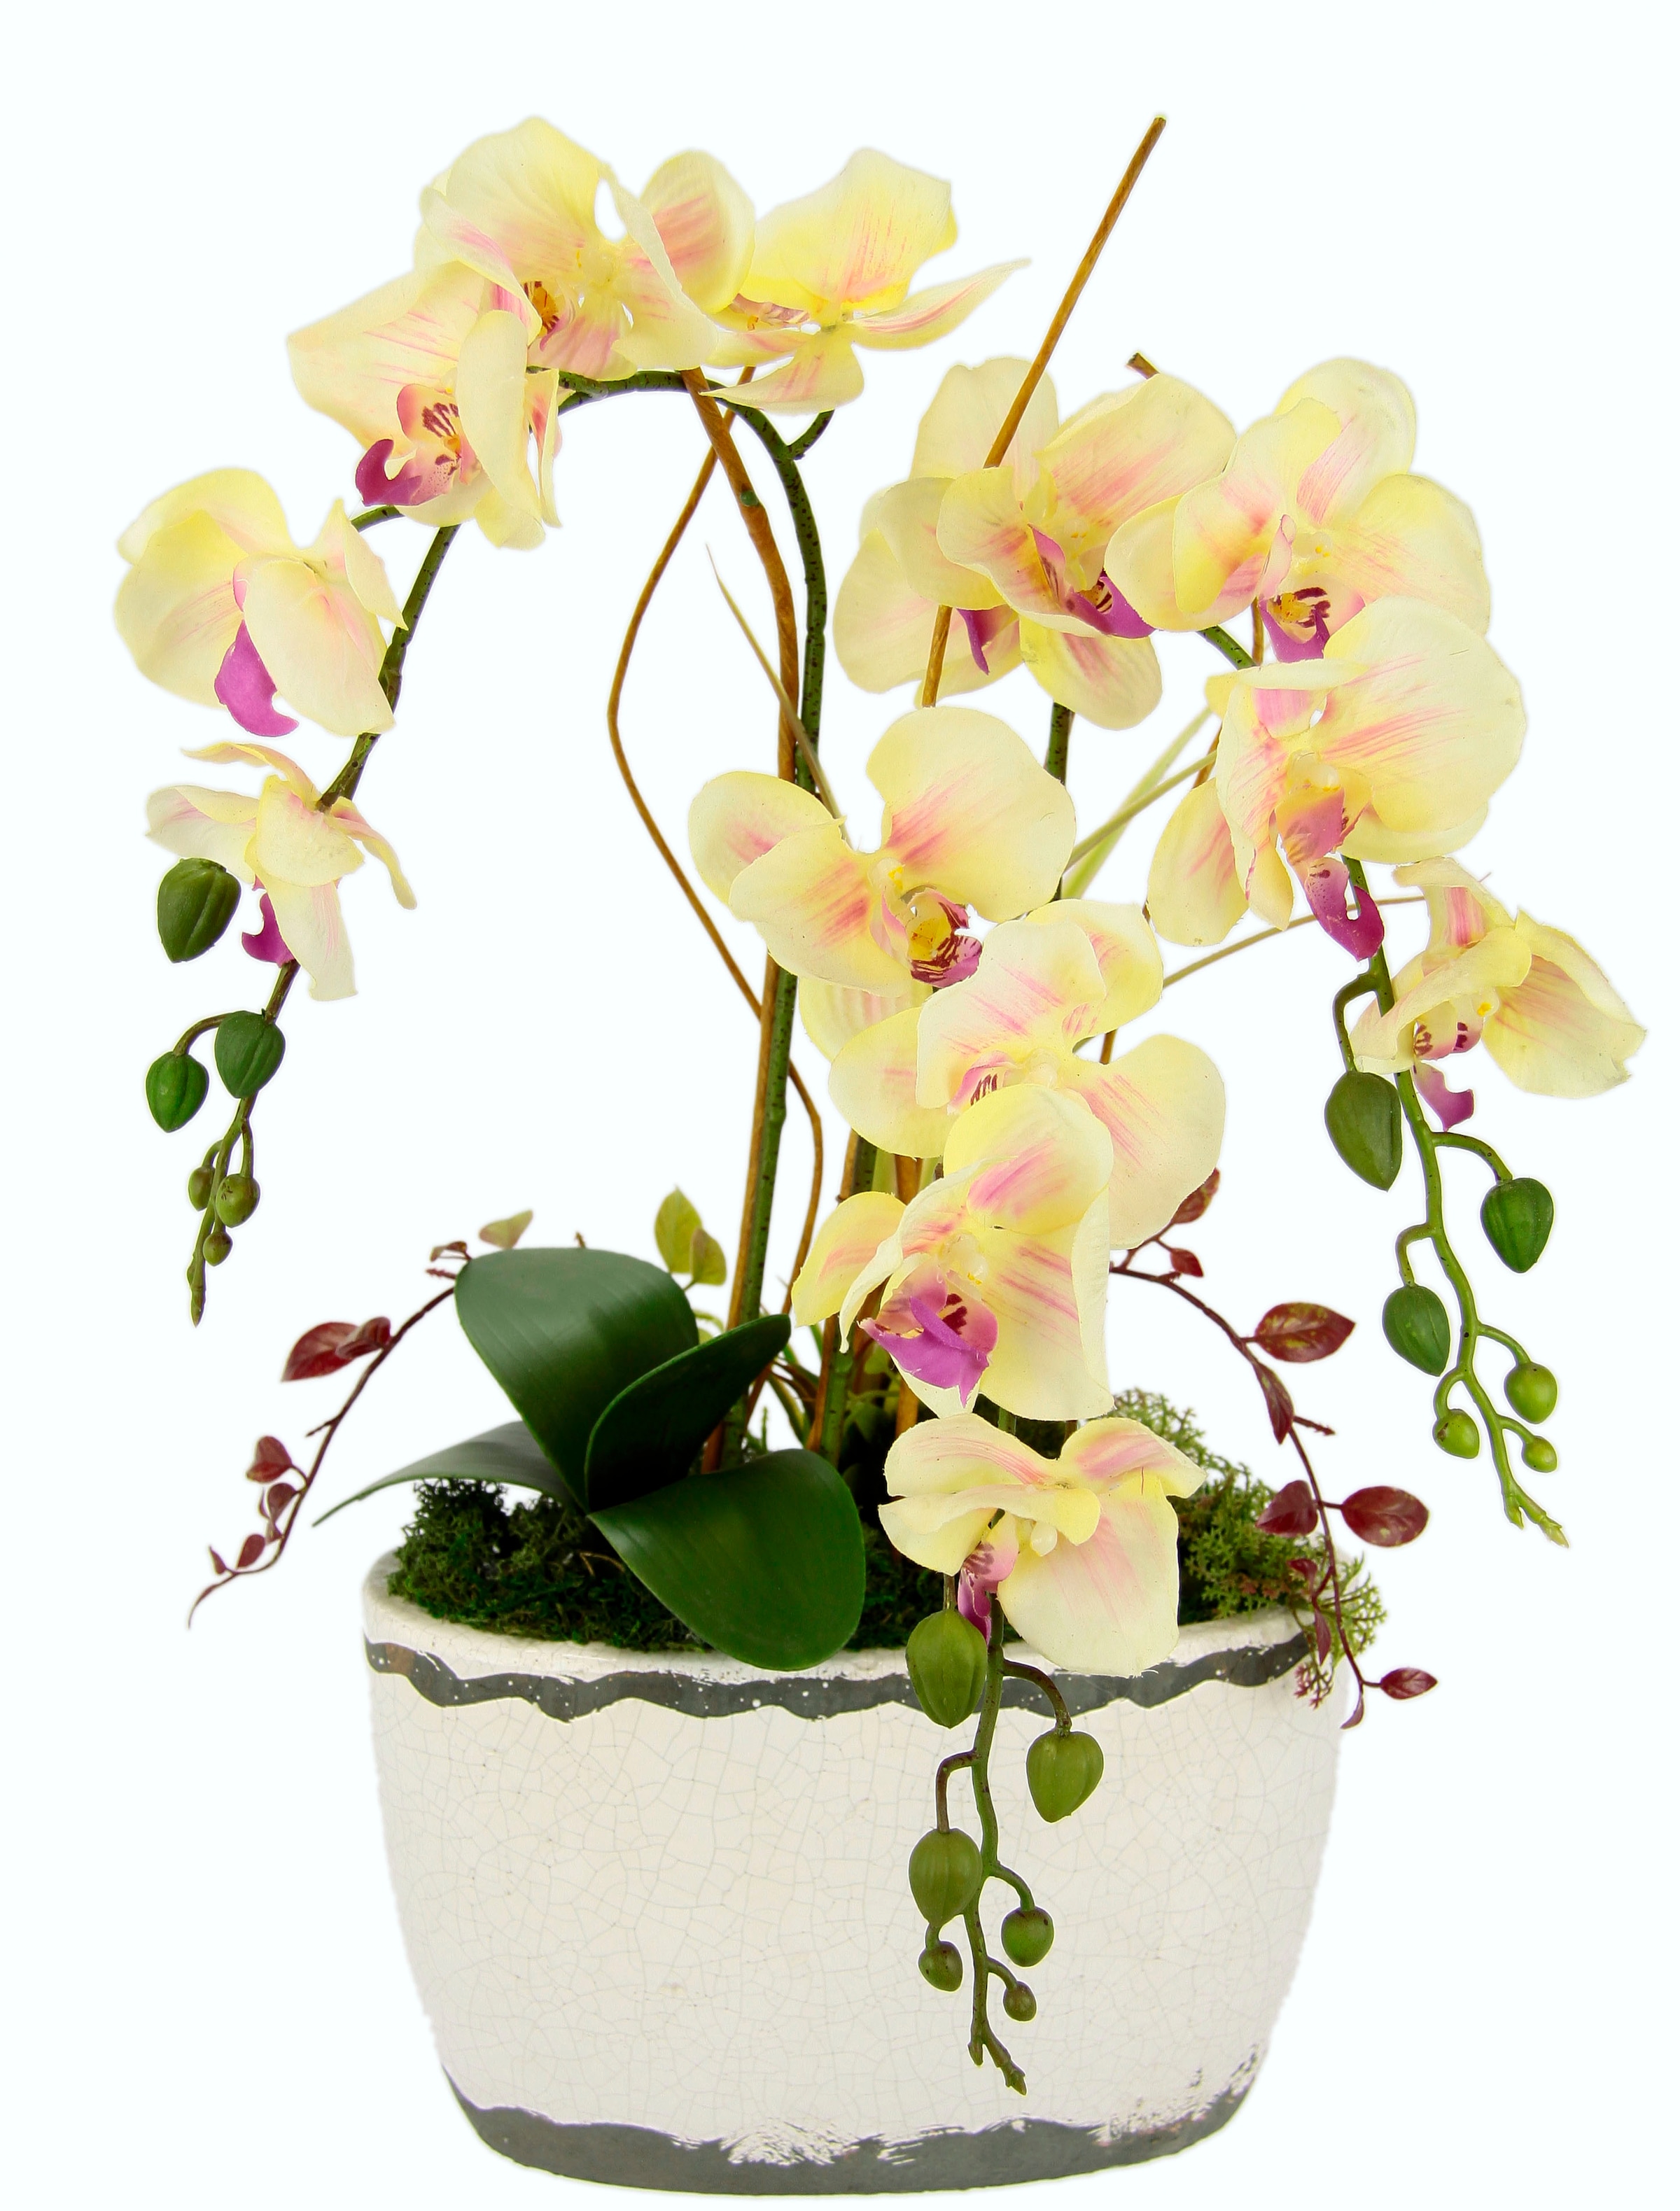 I.GE.A. Kunstblume »Orchidee«, (1 St.), in Antik-Schale aus Keramik bei OTTO